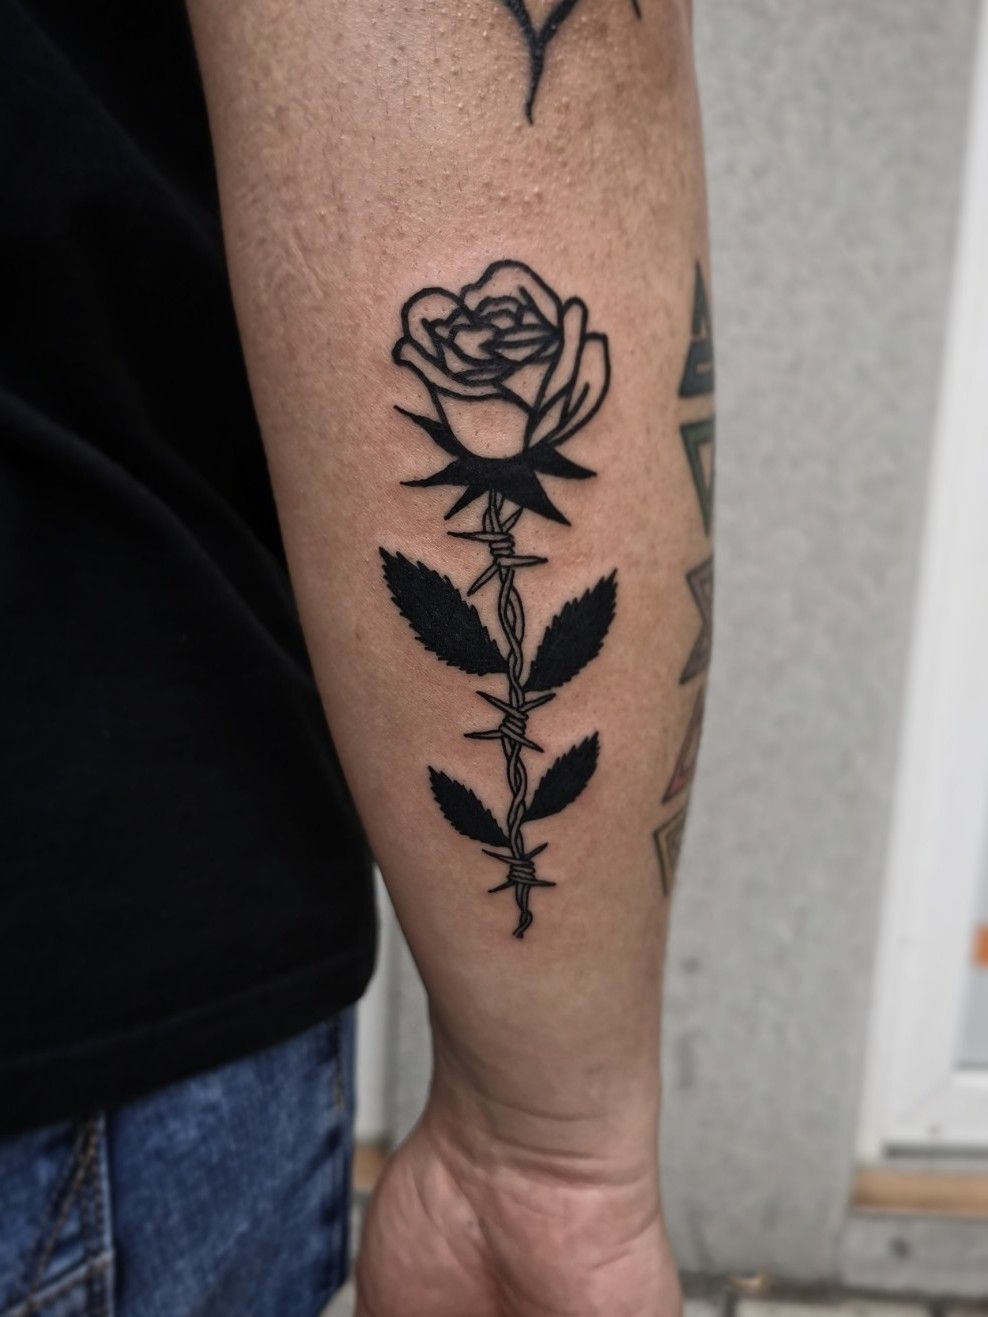 June Birth Flower Tattoo | Birth flower tattoos, Rose flower tattoos,  Tattoos